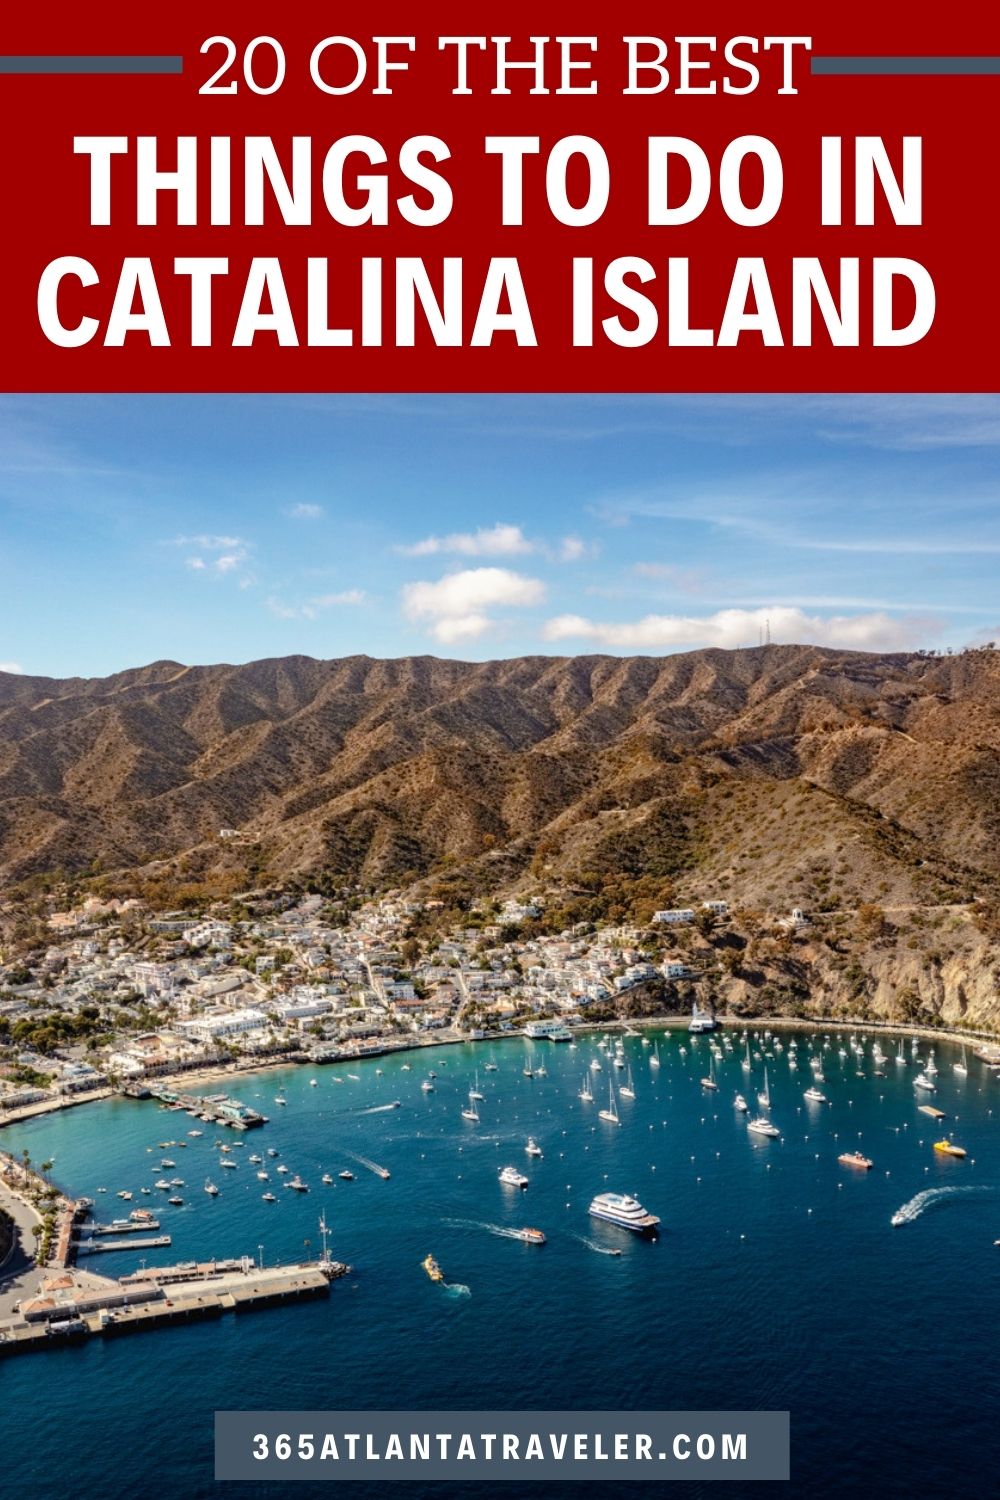 20 PHENOMENAL THINGS TO DO IN CATALINA ISLAND